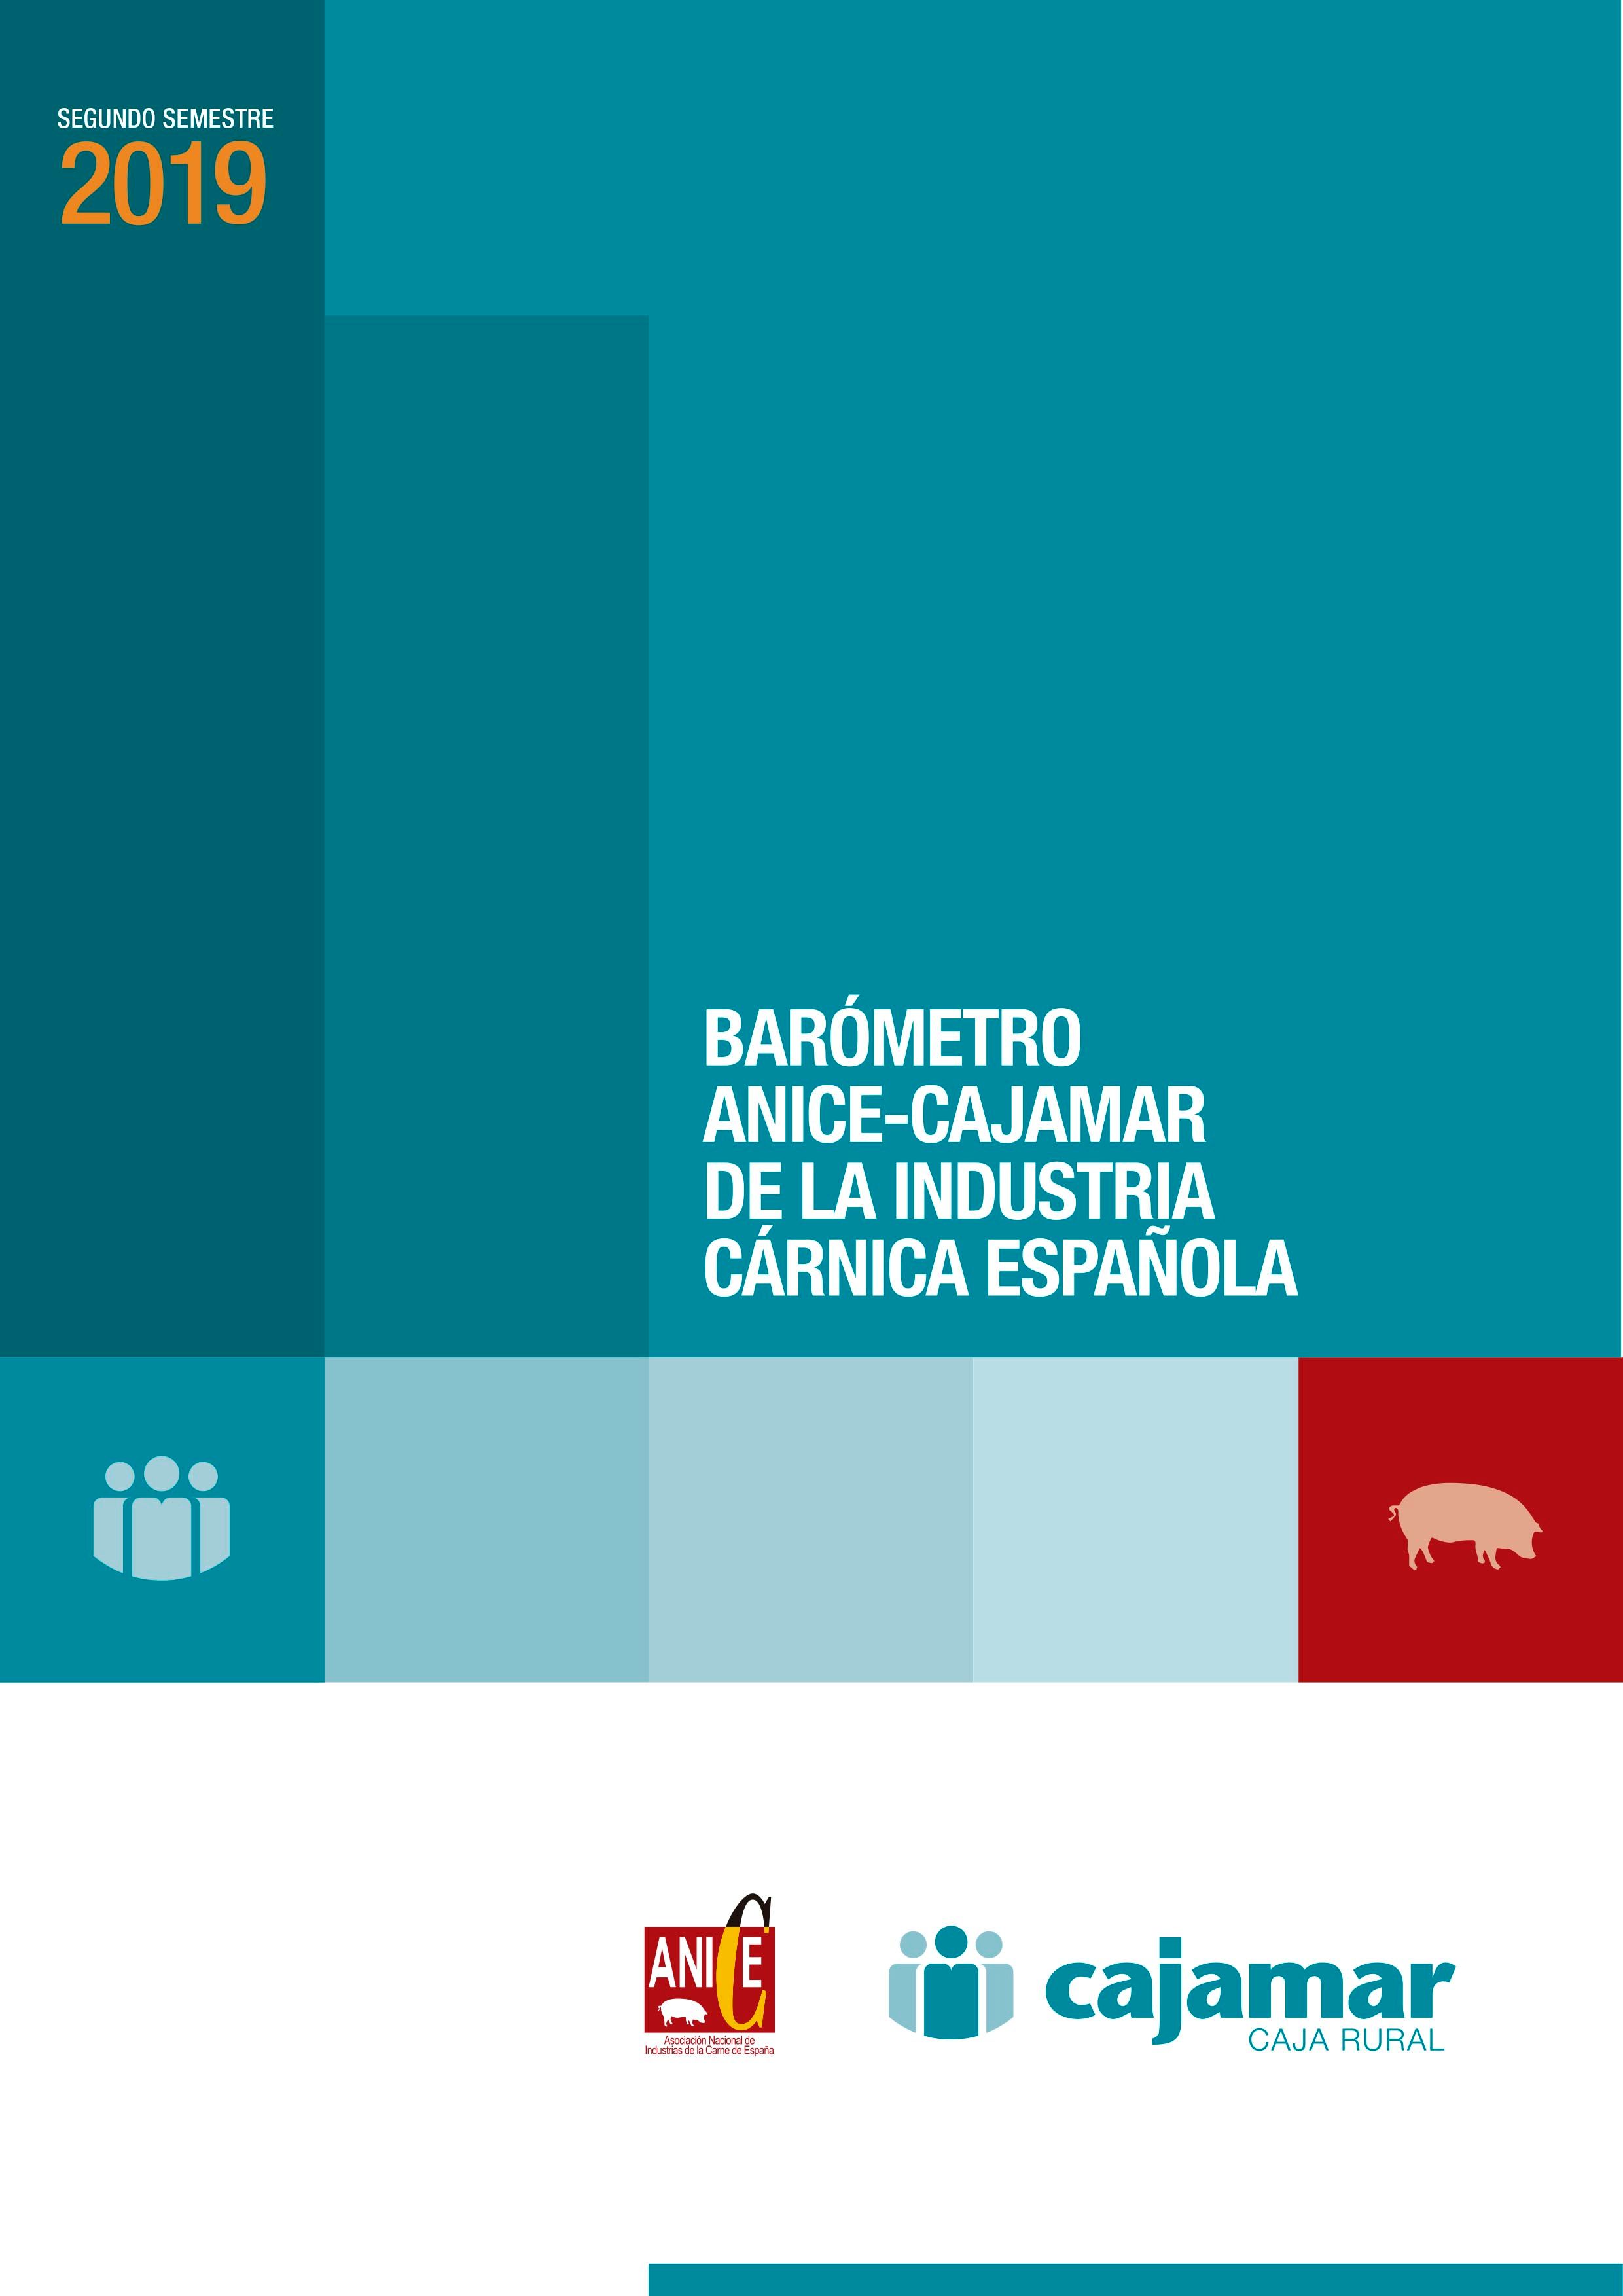 Portada libro "Barómetro ANICE-Cajamar de la industria cárnica española. Segundo semestre 2019" - Plataforma Tierra